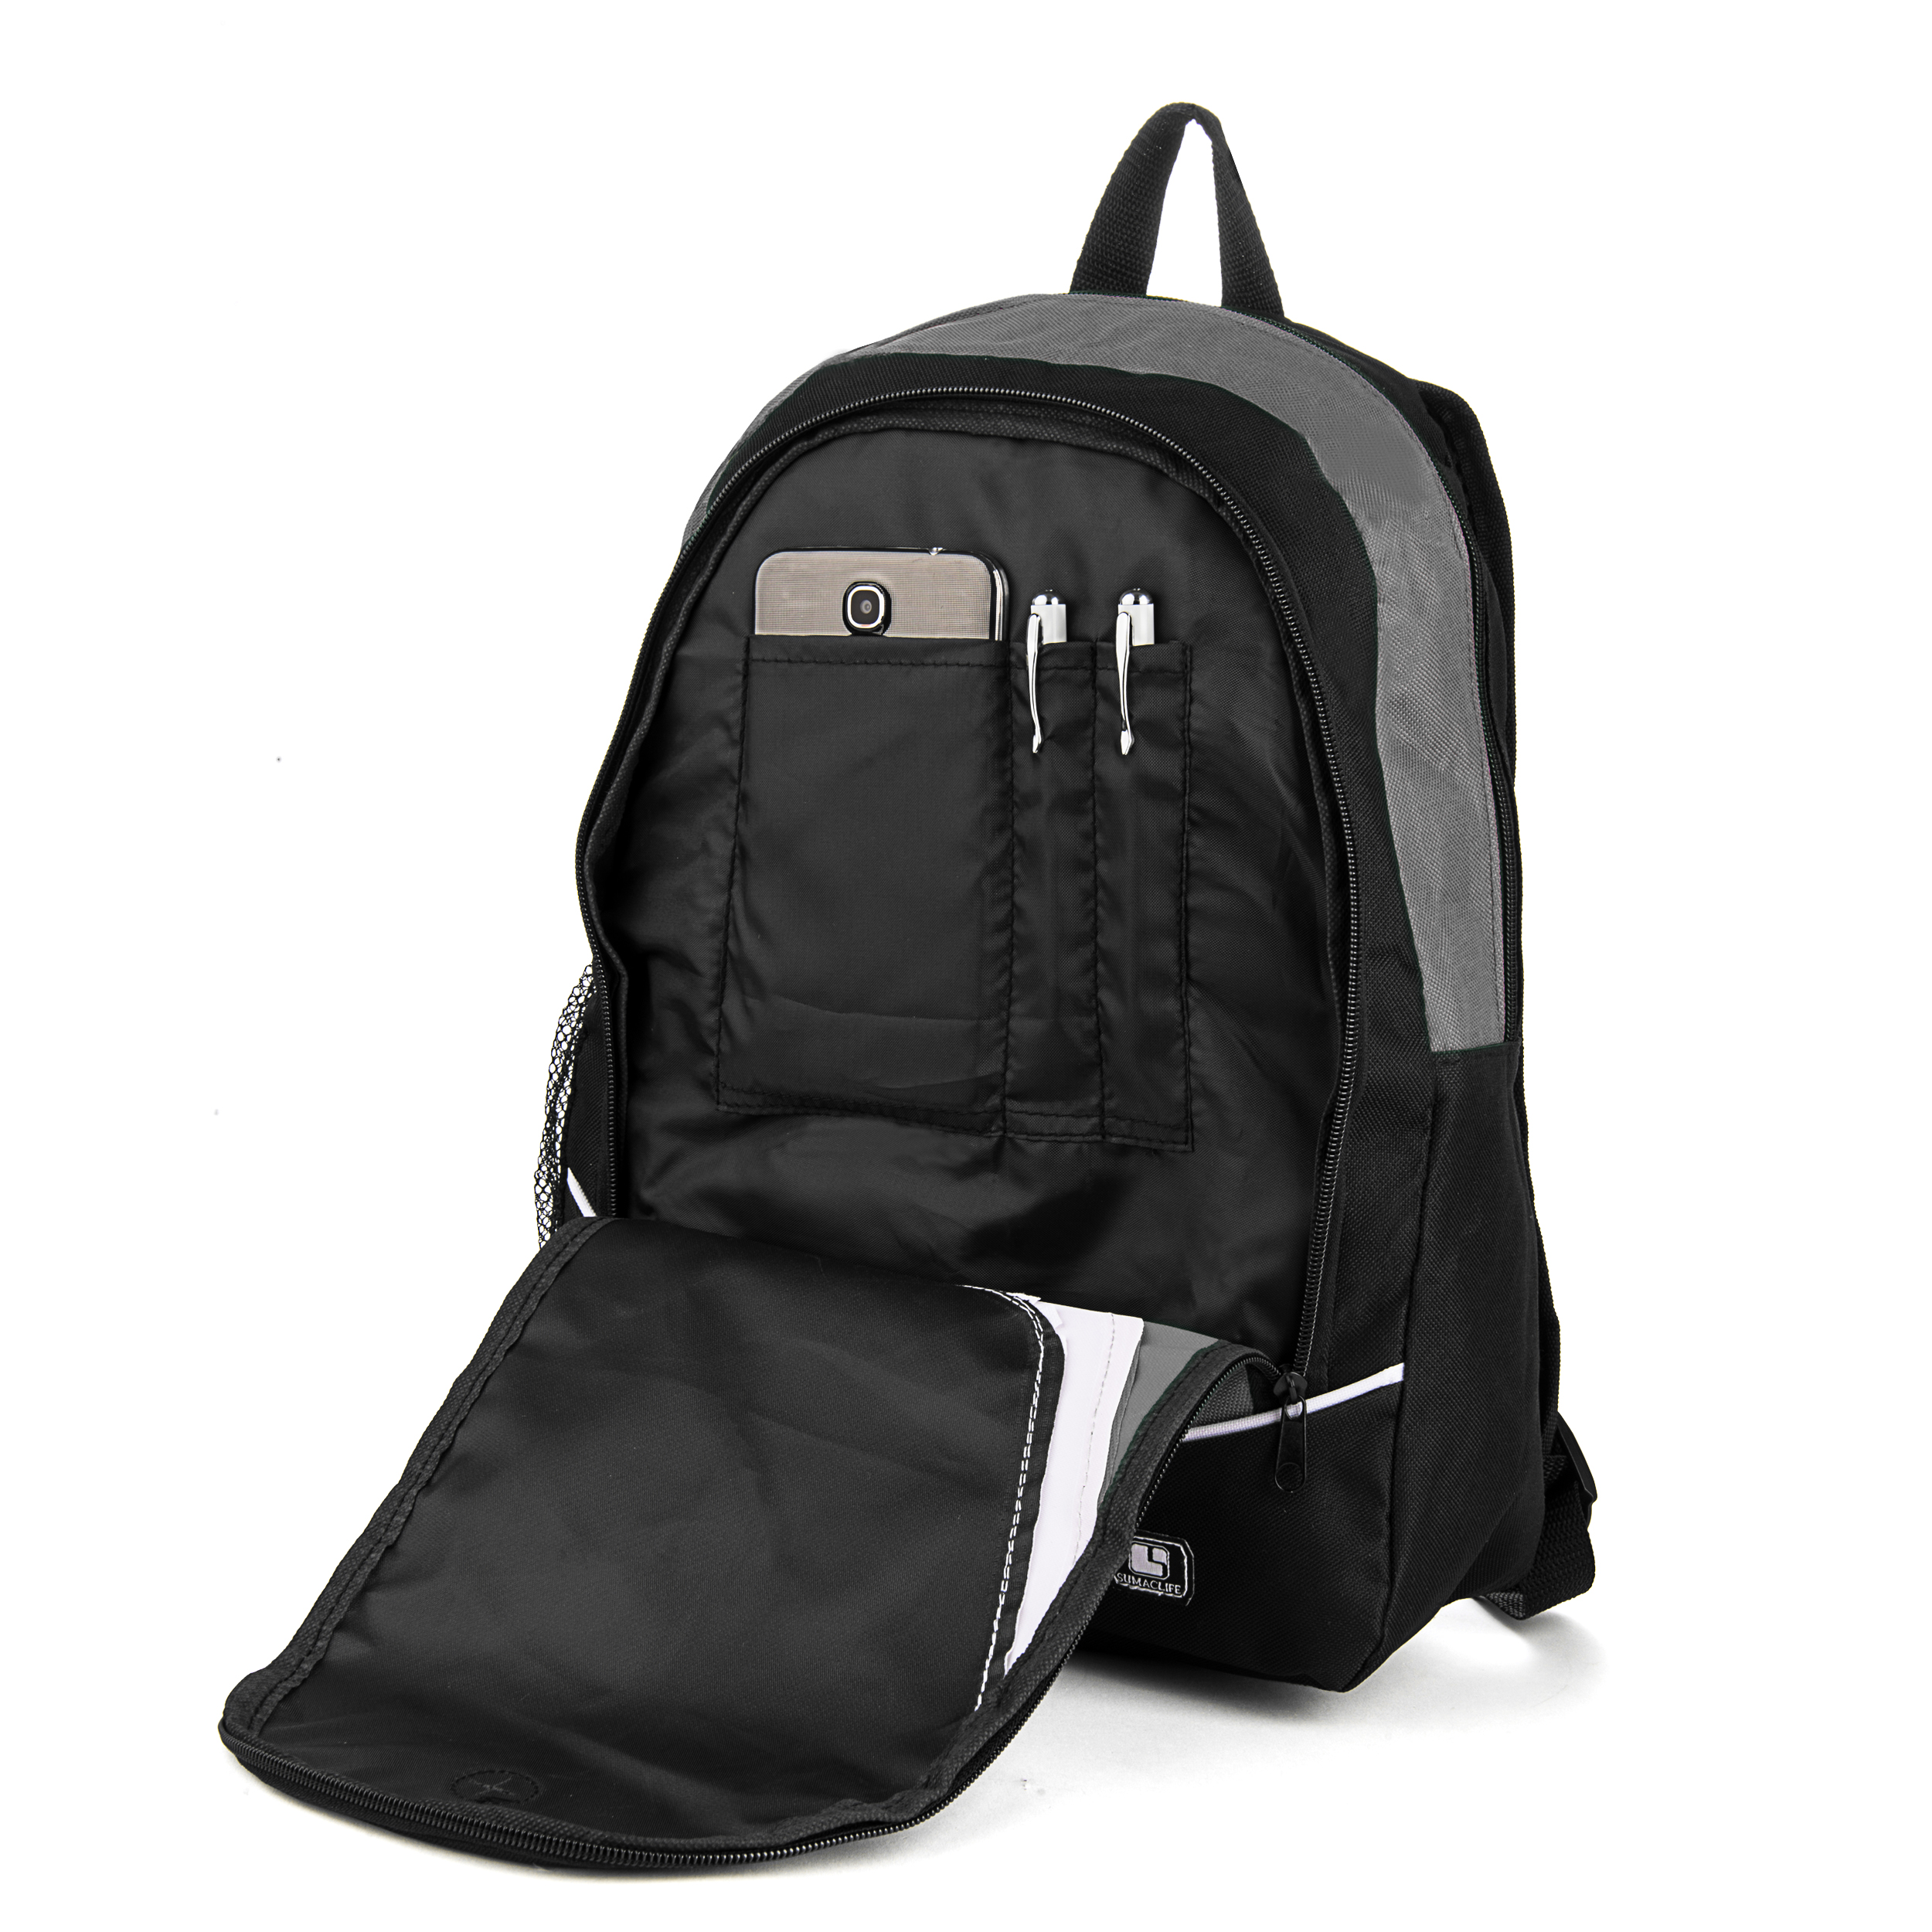 sumaclife Nylon Lightweight Multi-purpose School Backpack fits Apple Macbook Pro 13.3 to 15.6 inch Laptops